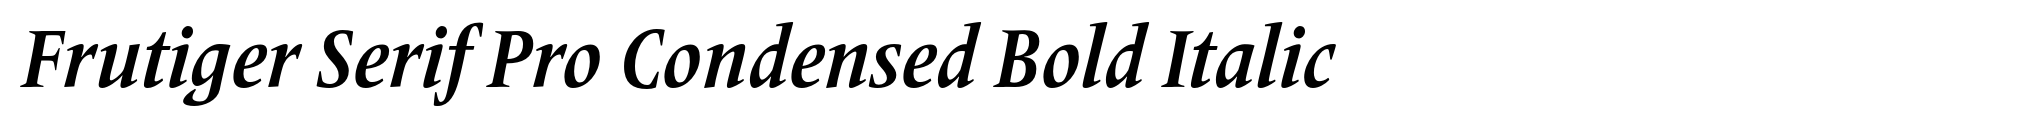 Frutiger Serif Pro Condensed Bold Italic image